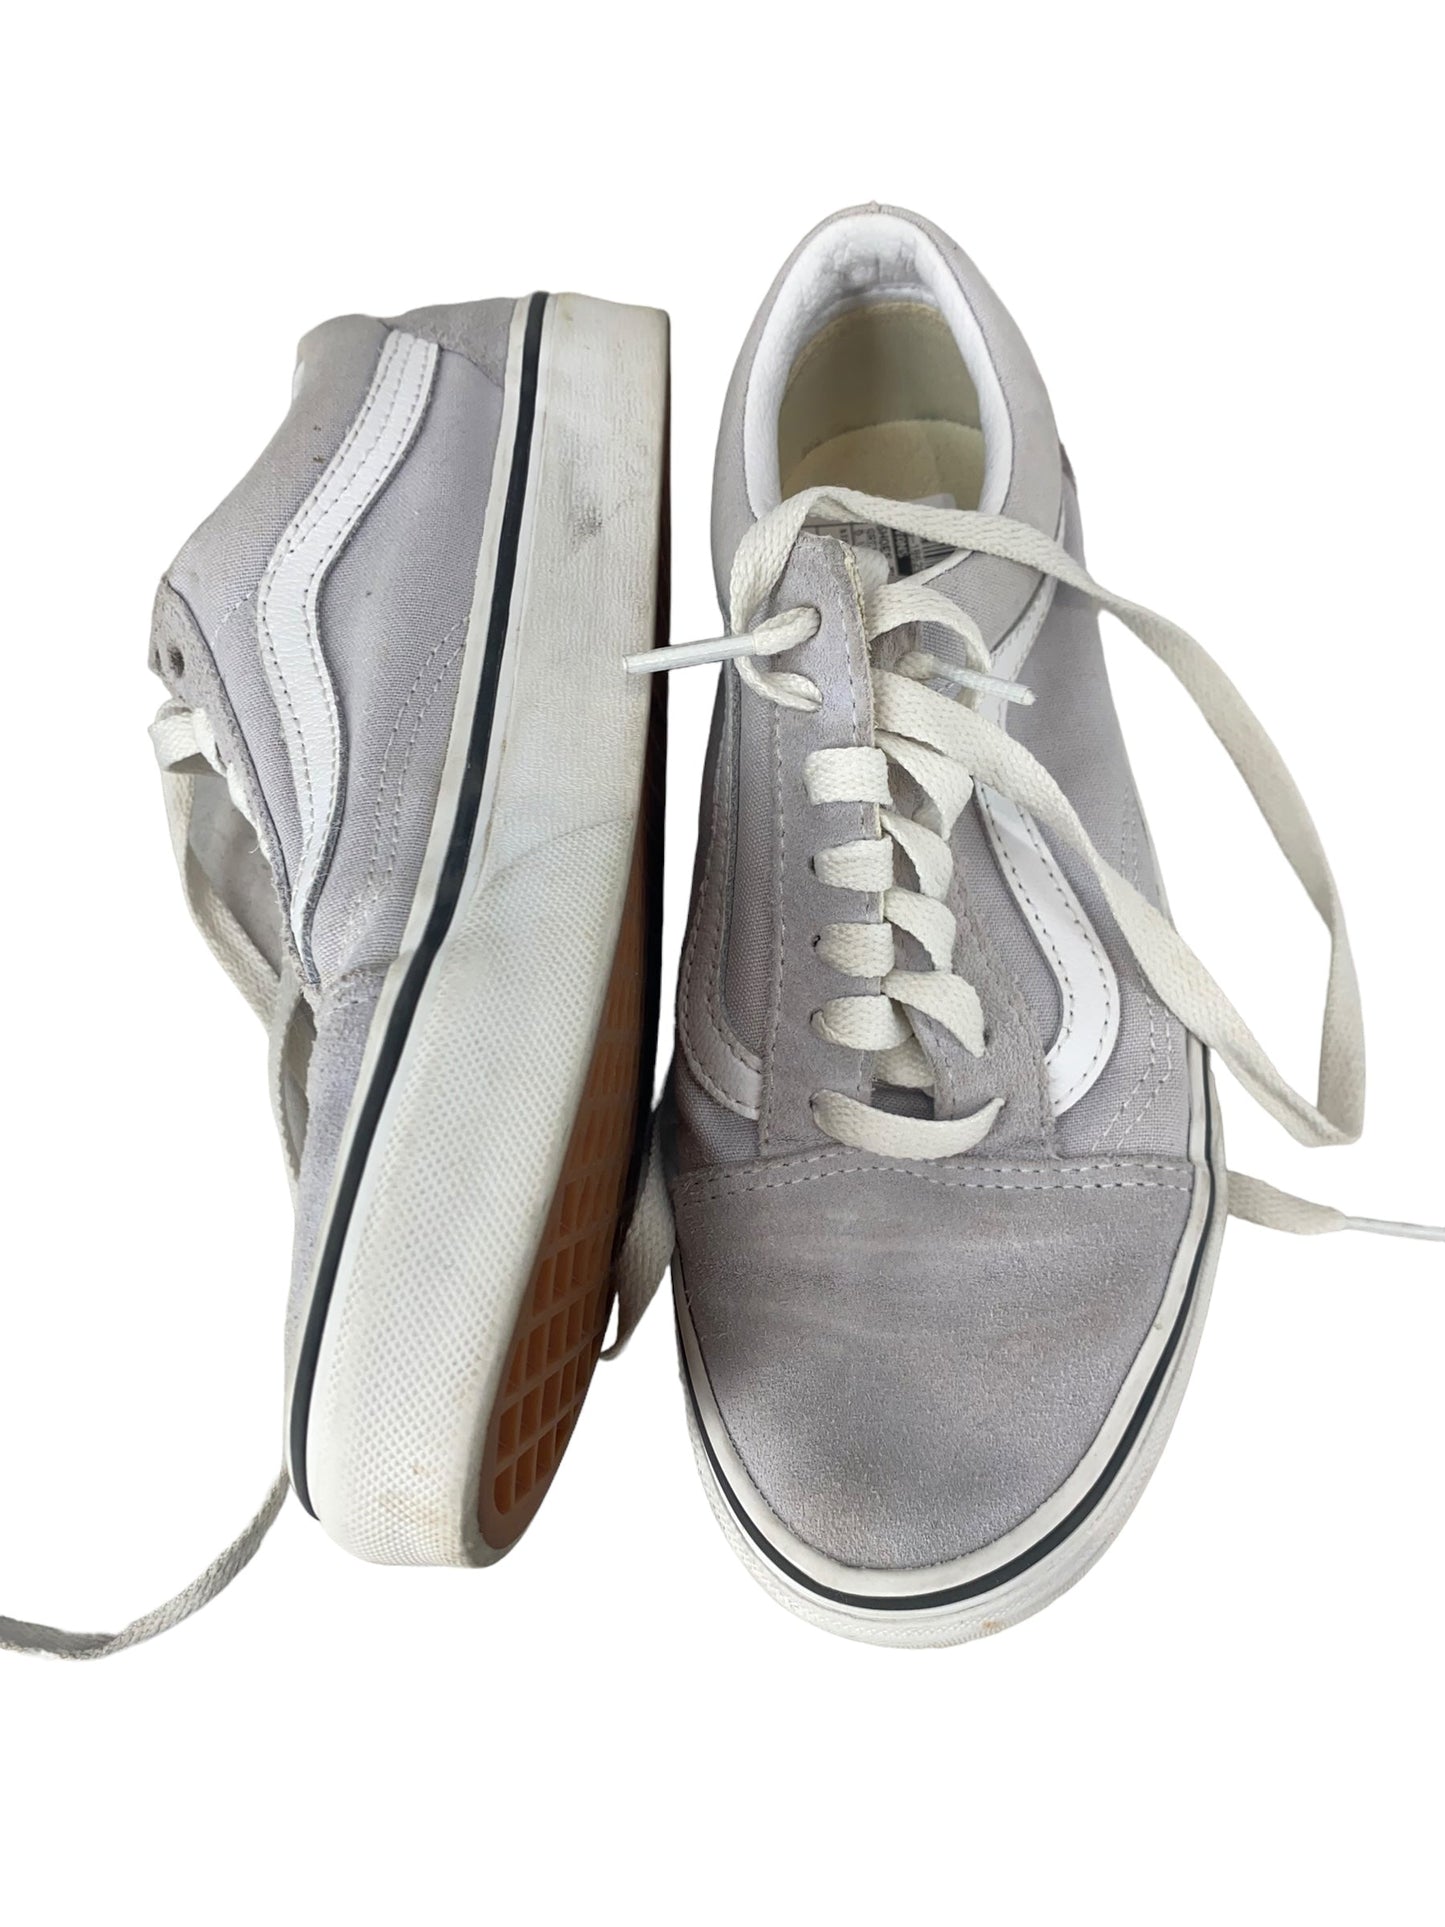 Grey Shoes Flats Vans, Size 5.5